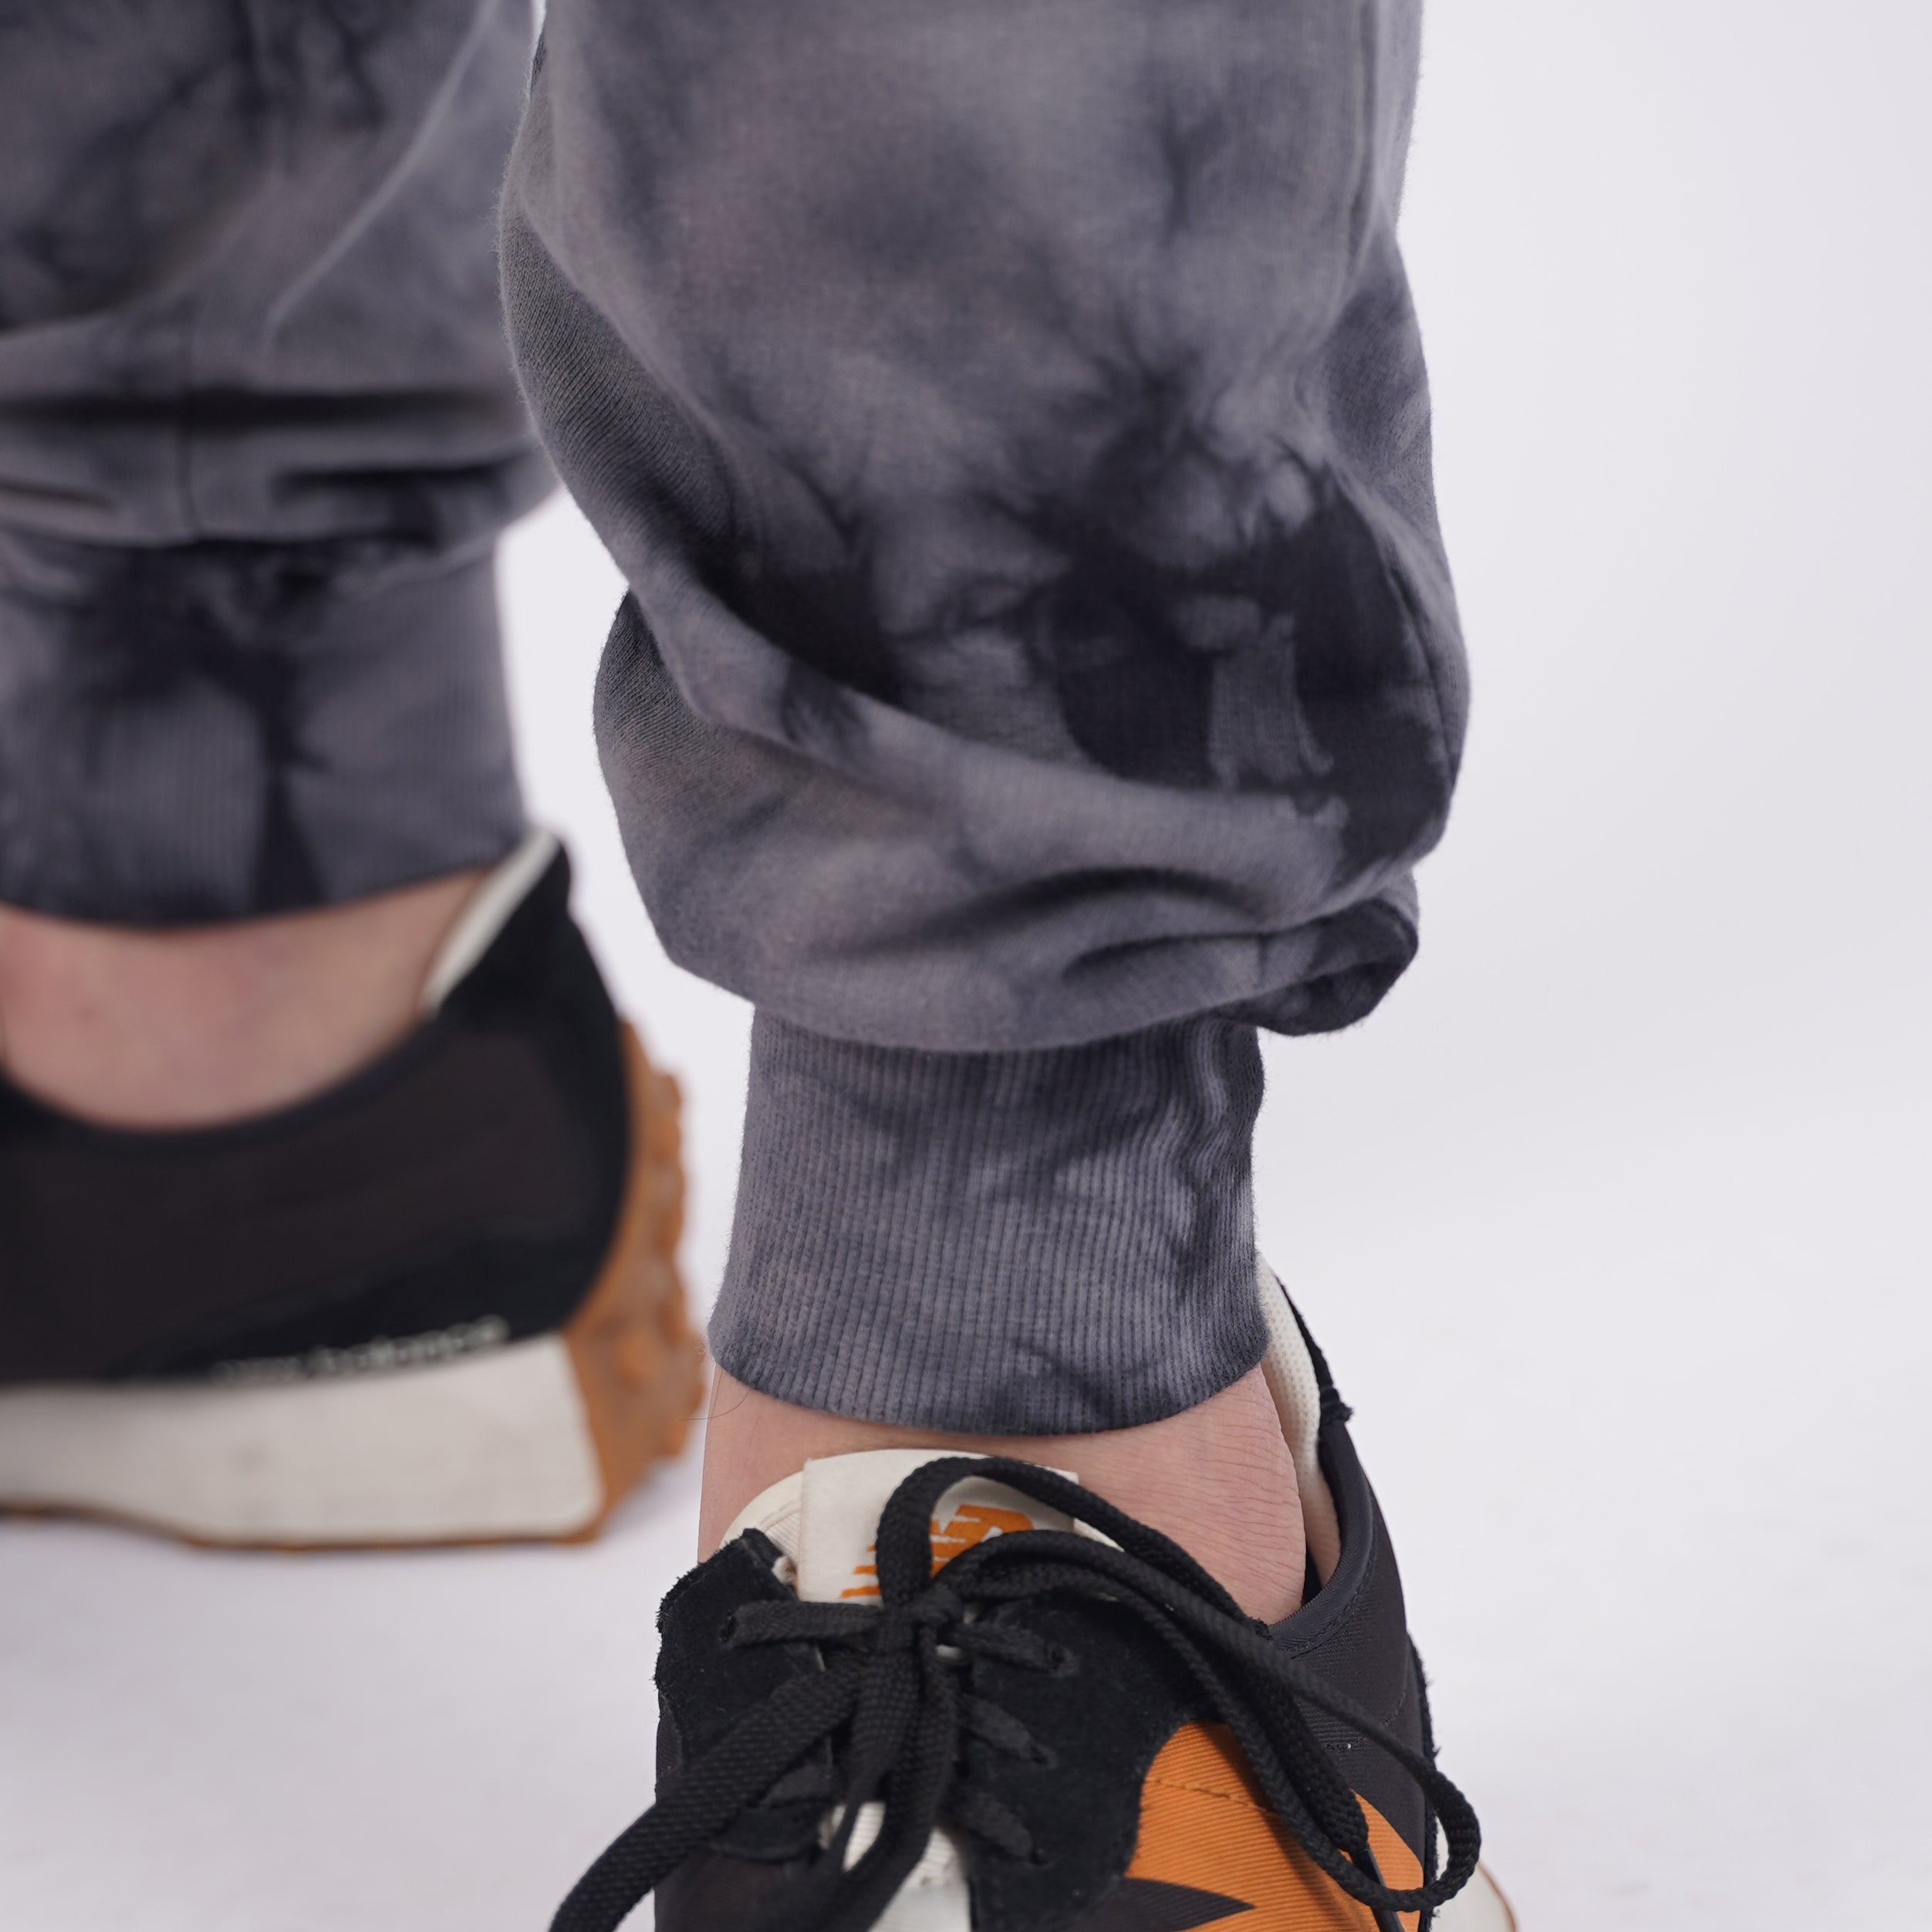 Celana Jogger Pria Tersedia 2 Warna [CG-OUMJ 01]